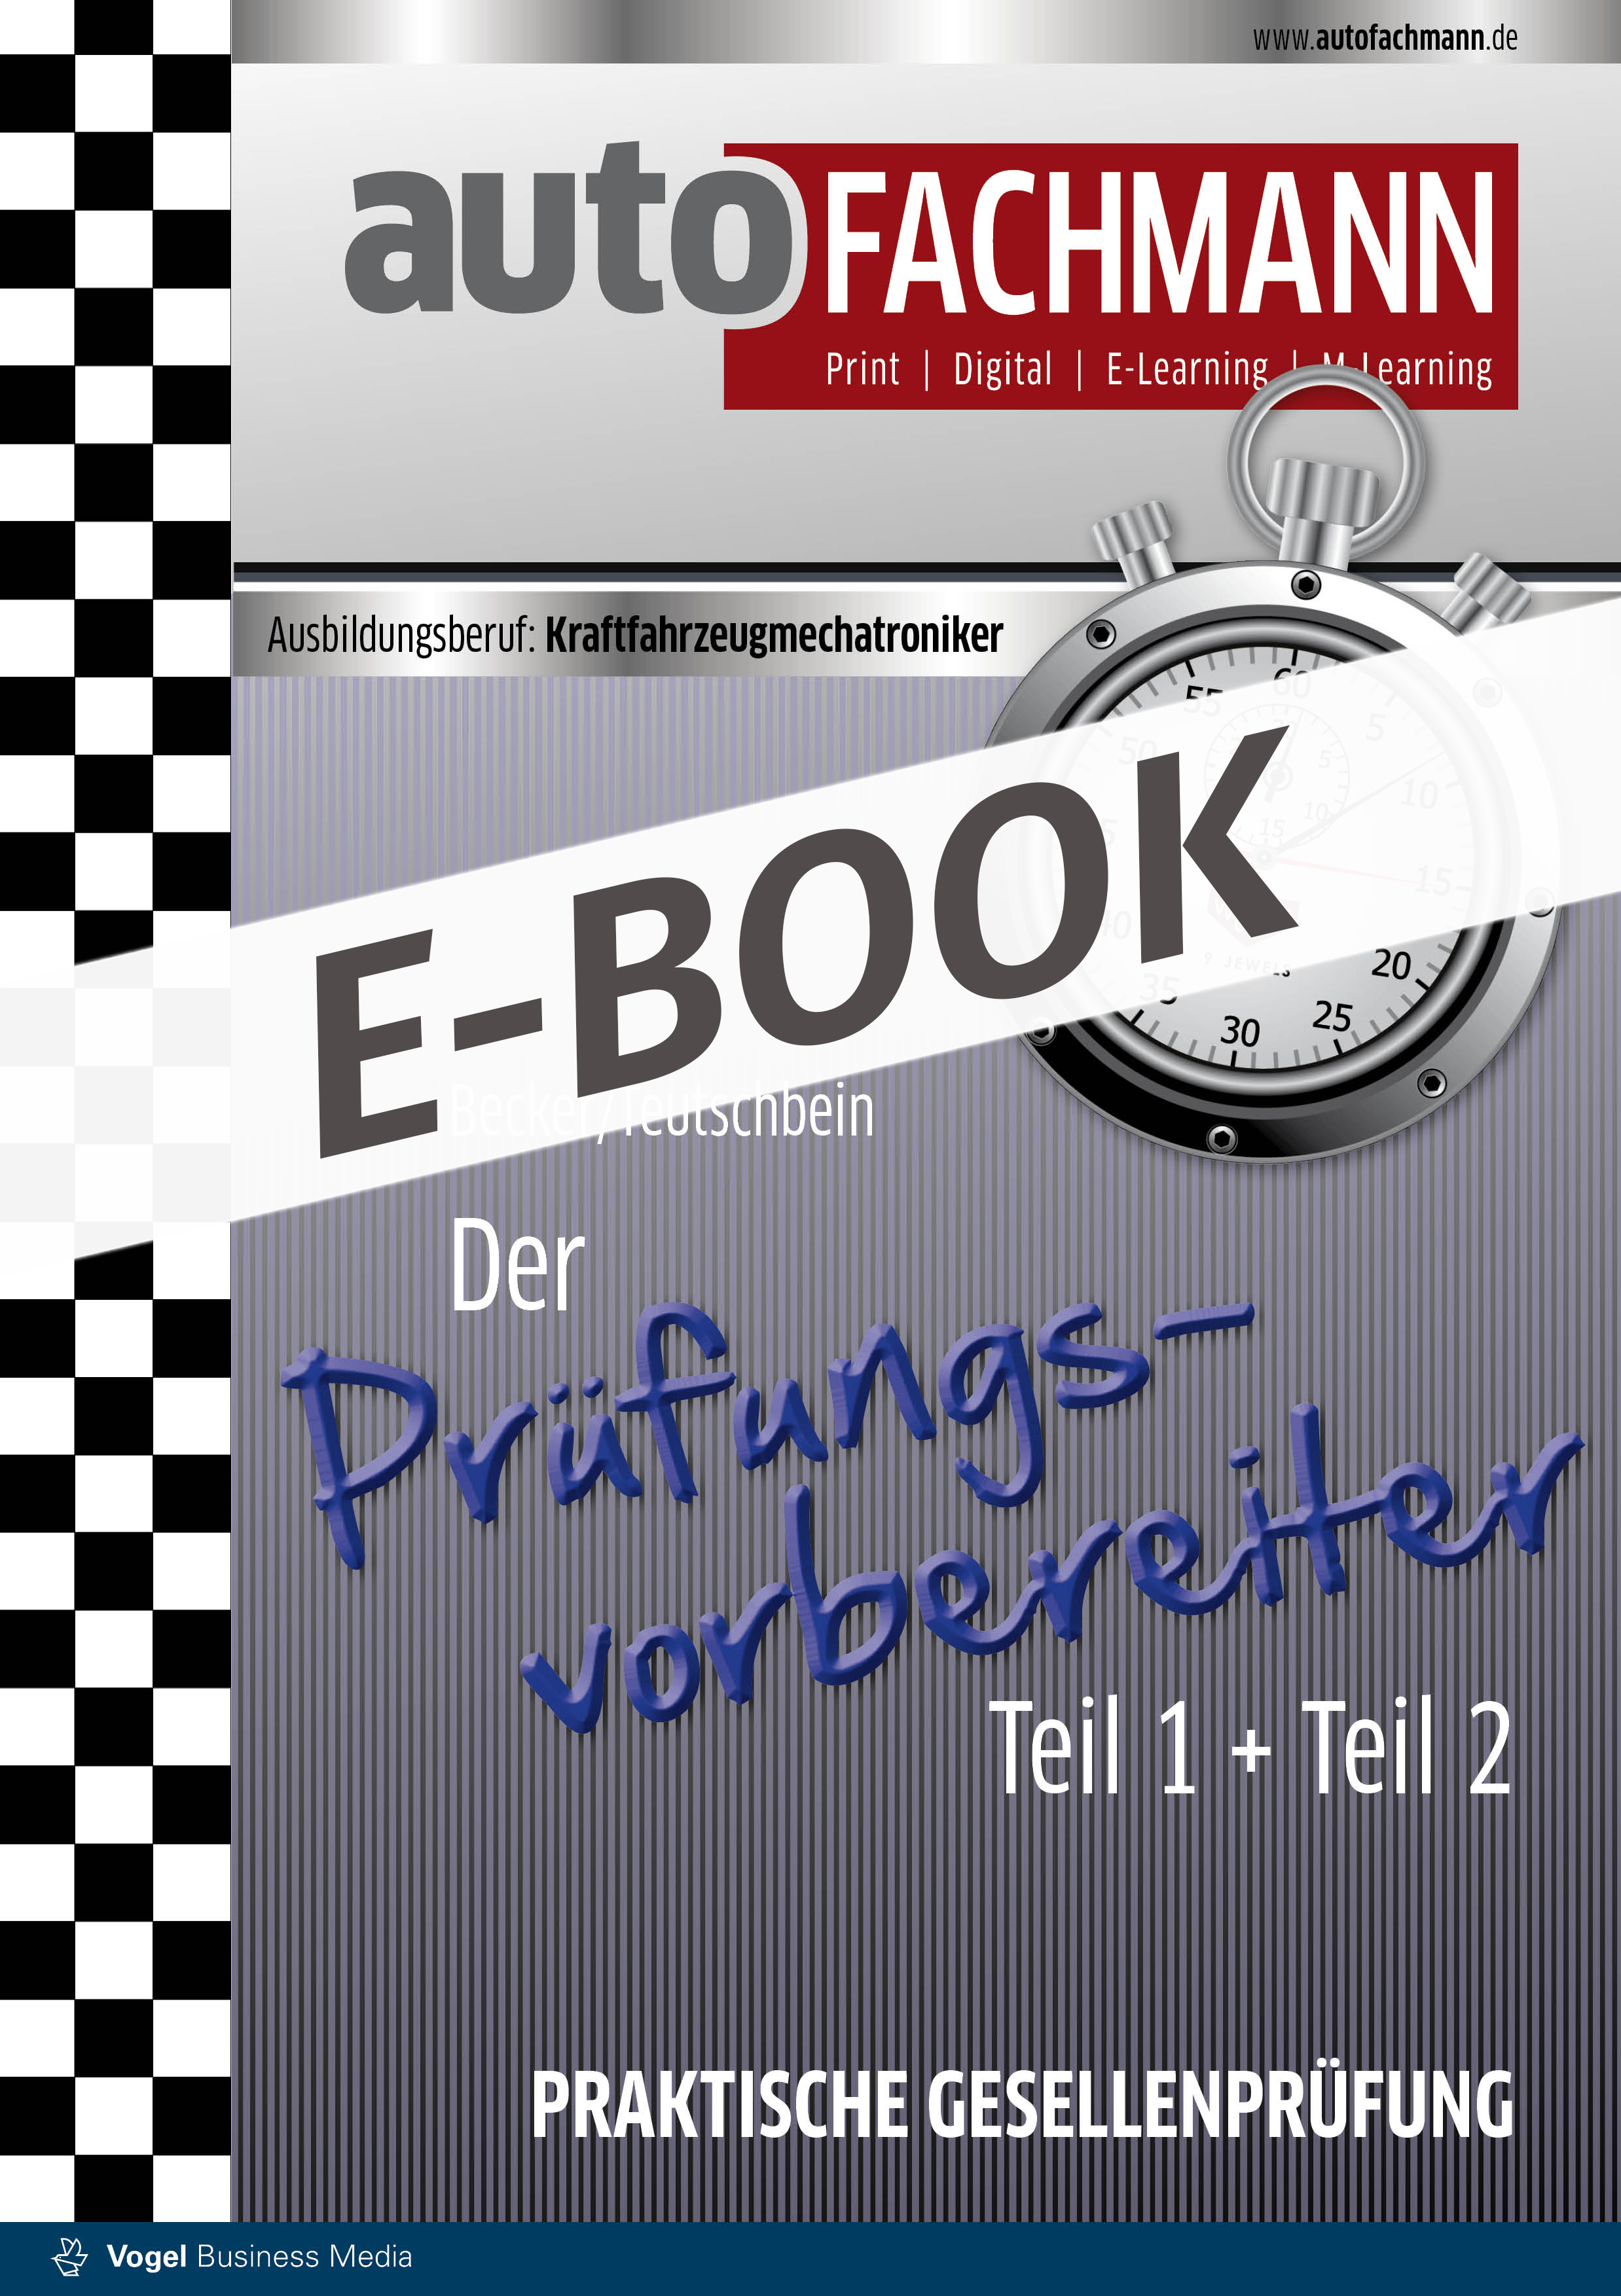 Prüfungsvorbereiter Kfz-Mechatroniker Praxis Teil 1 + Teil 2 E-Book